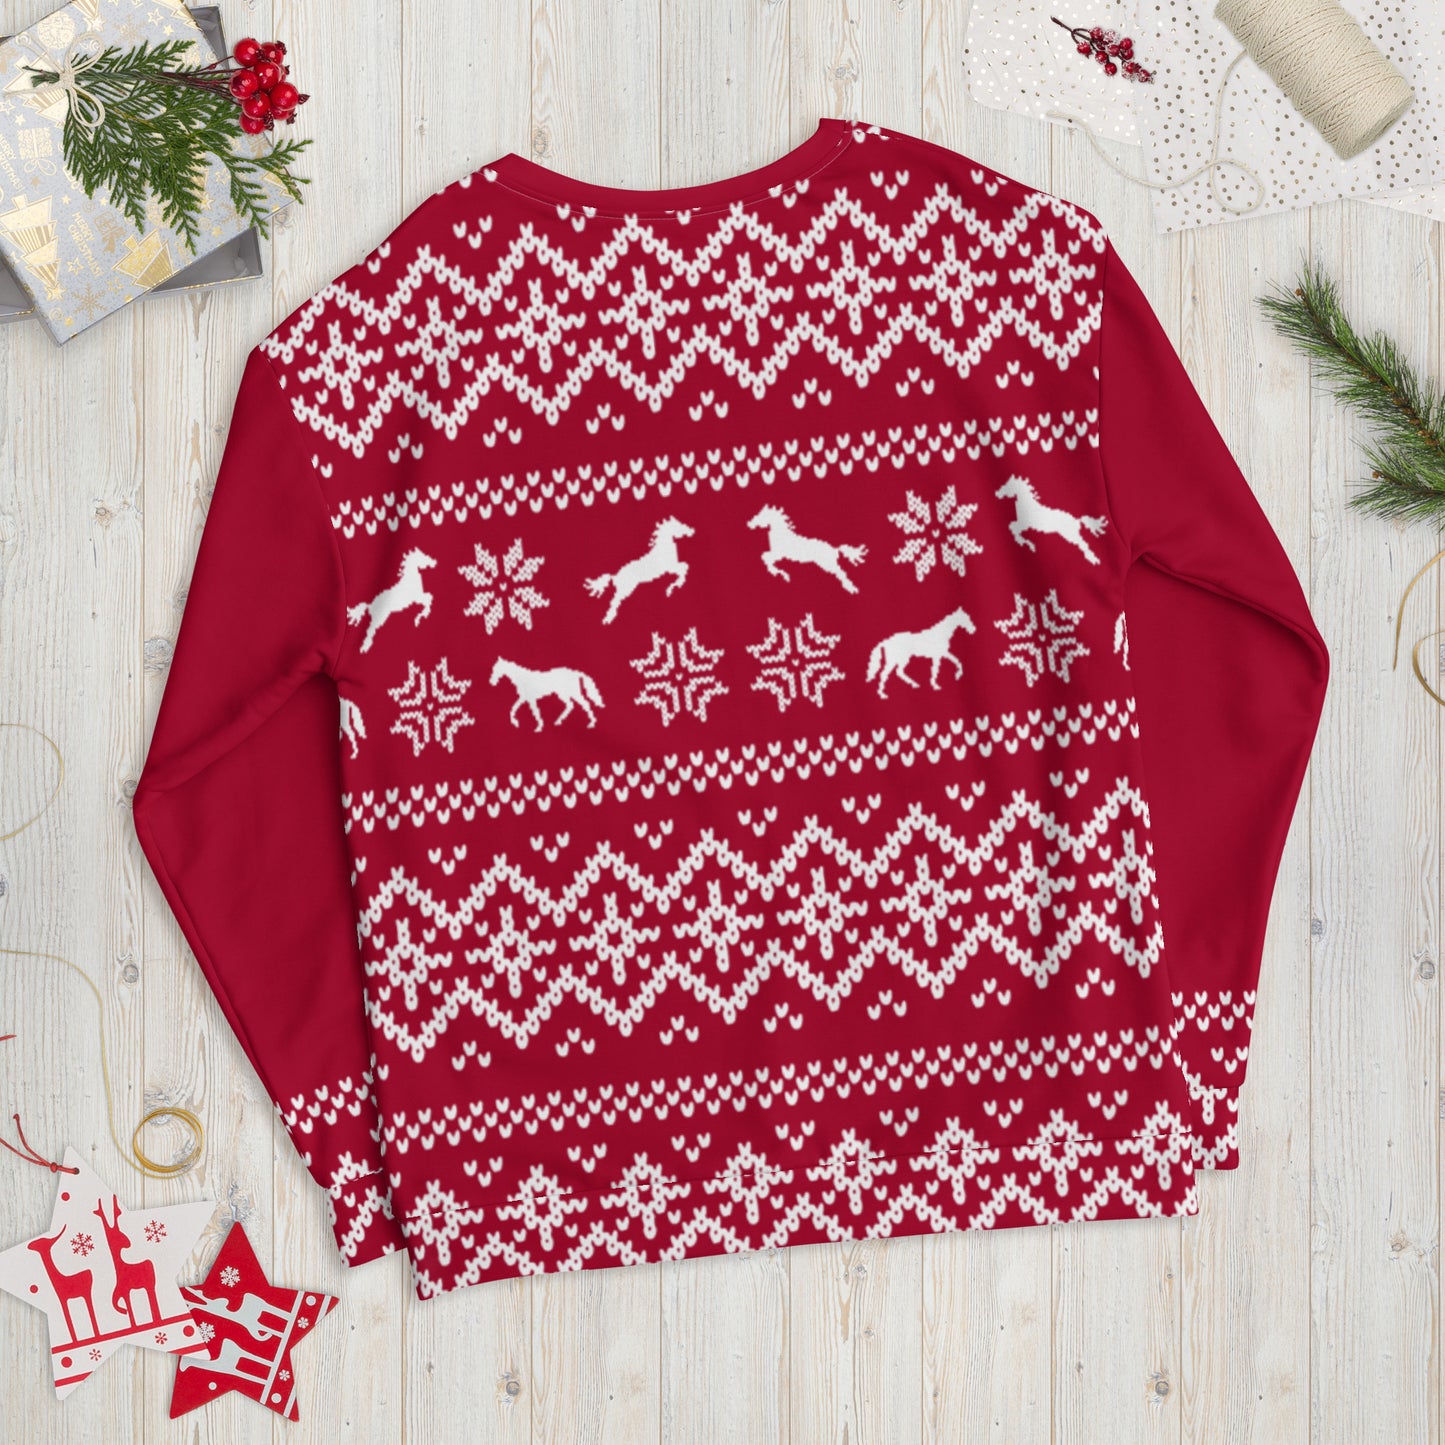 Merry Neighmas Ugly Sweater